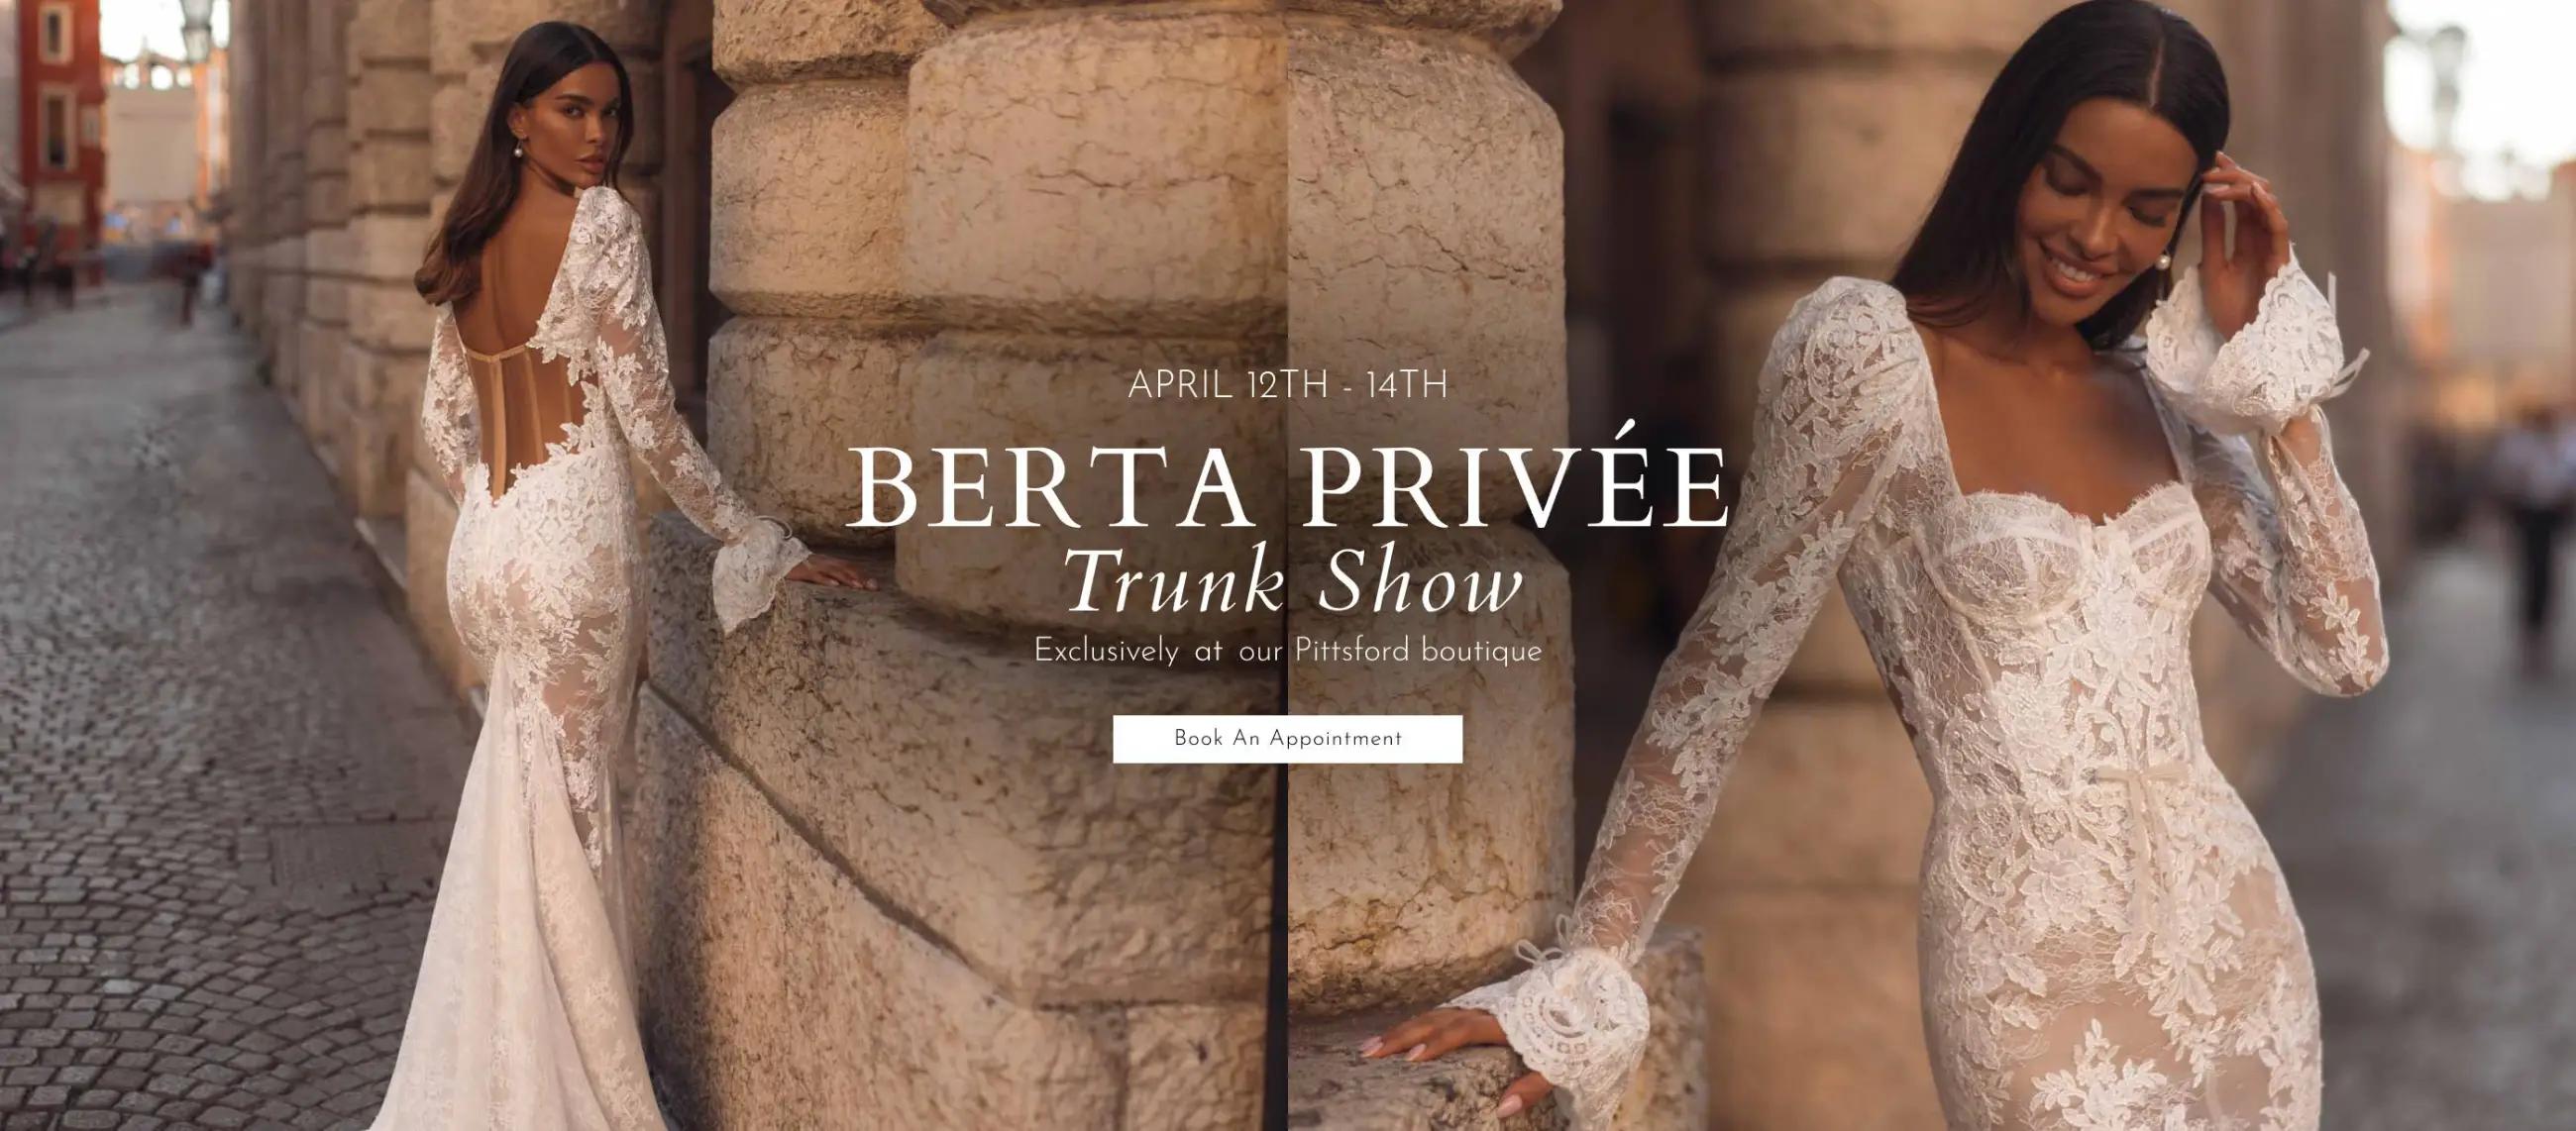 Berta Privee trunk show